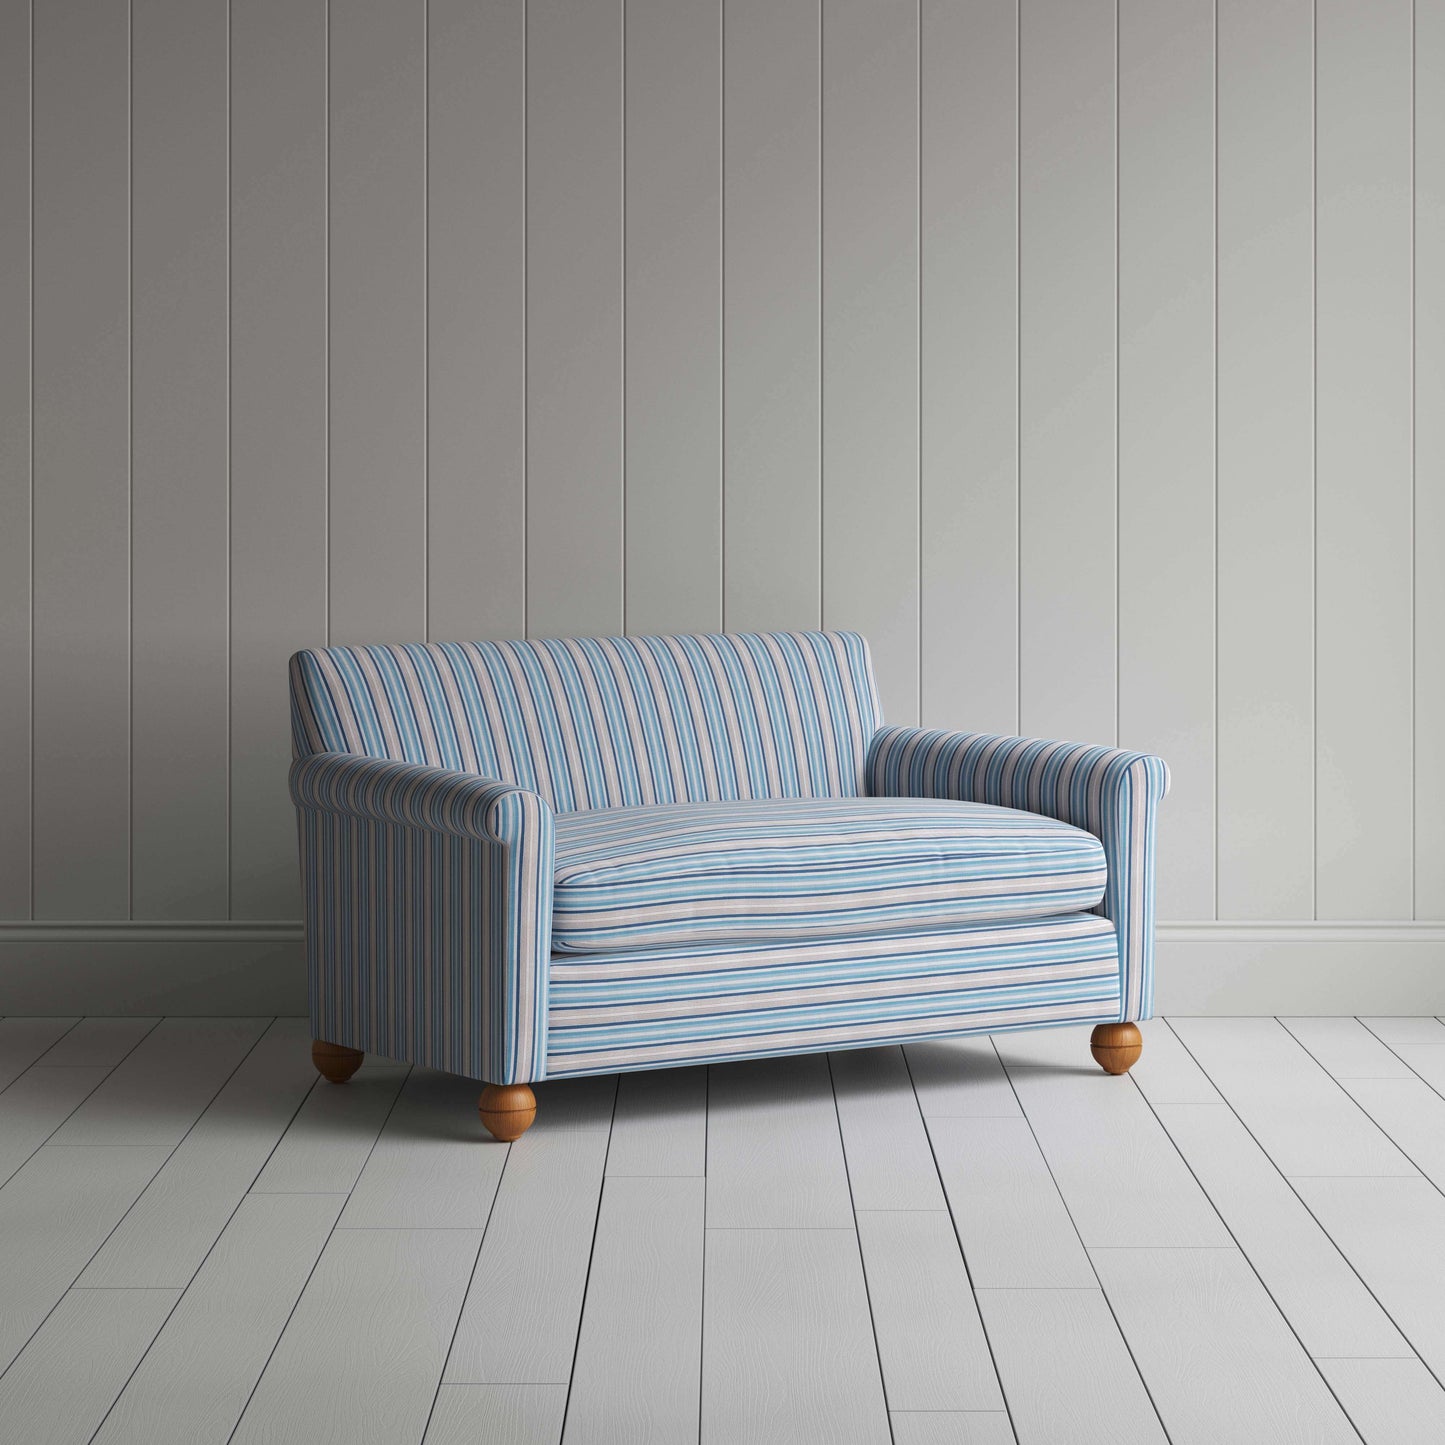 Idler 2 Seater Sofa in Slow Lane Cotton Linen, Blue